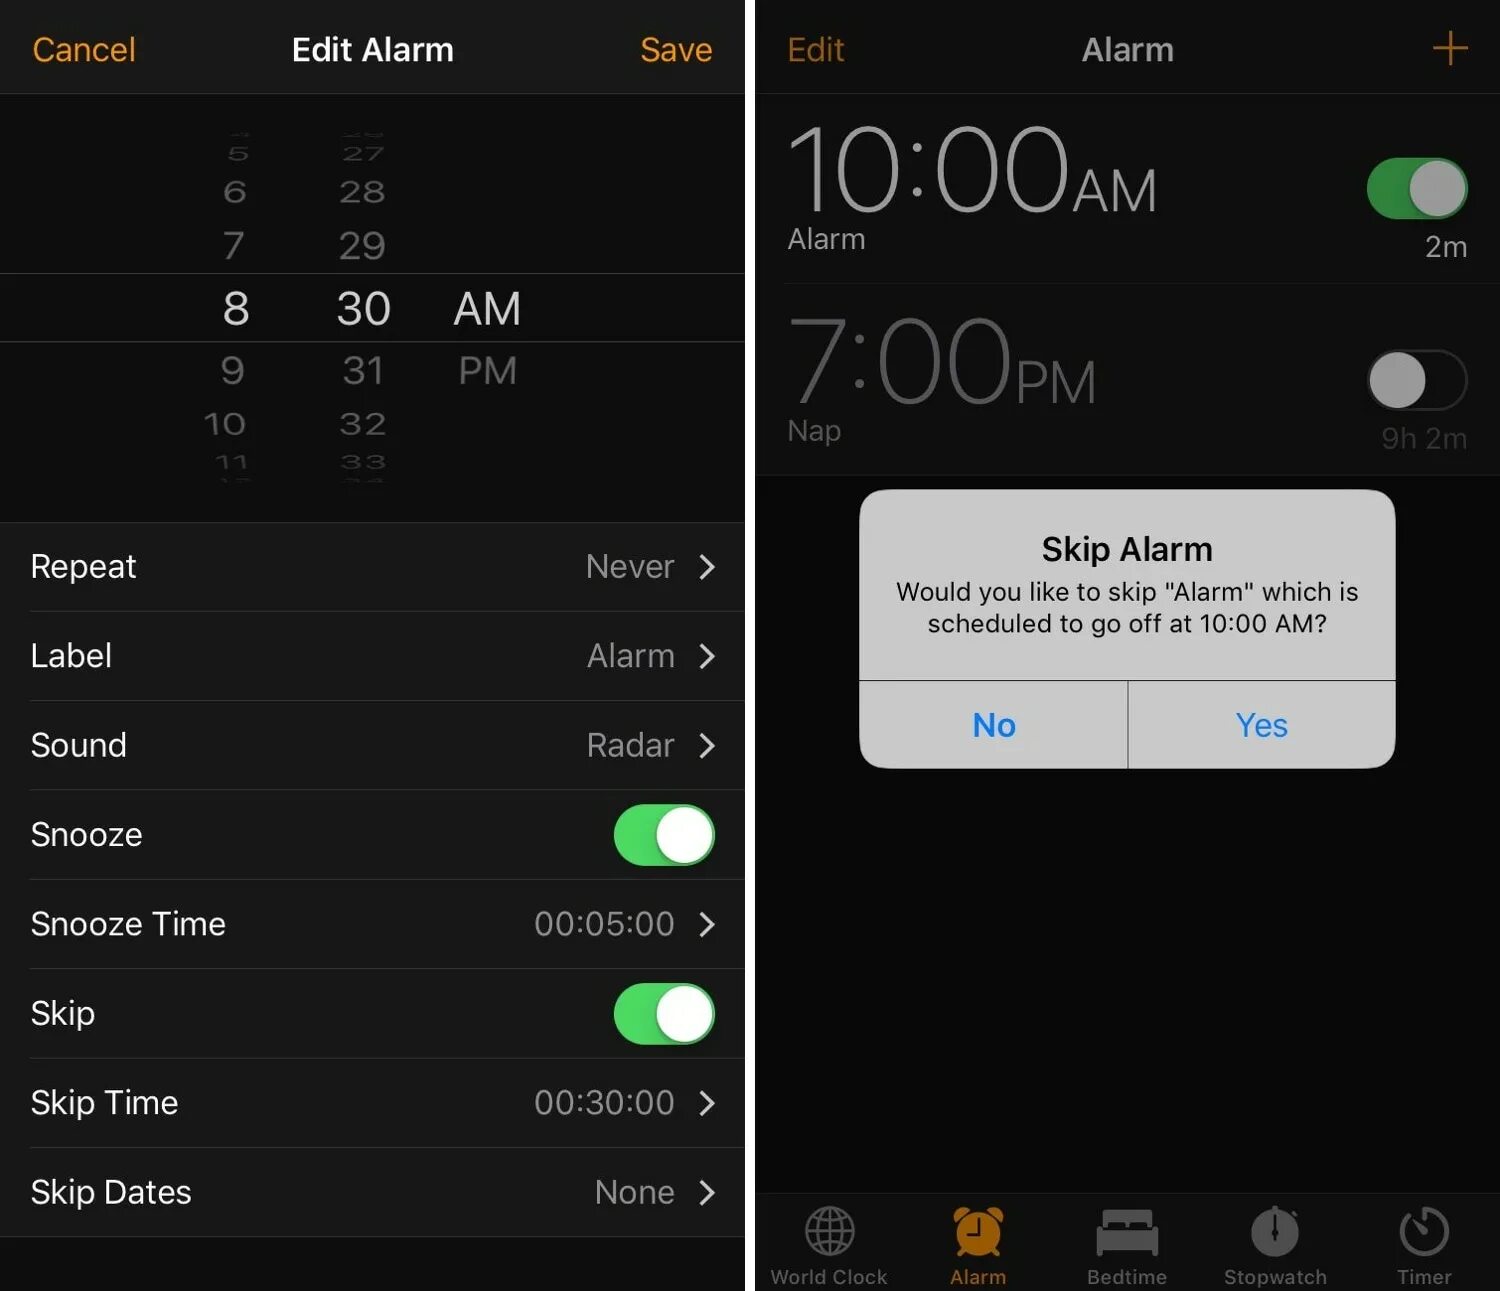 IOS Alarm. Iphone Alarm. Аларм iphone. Iphone Alarm Clock interface. Айфоновский будильник звук